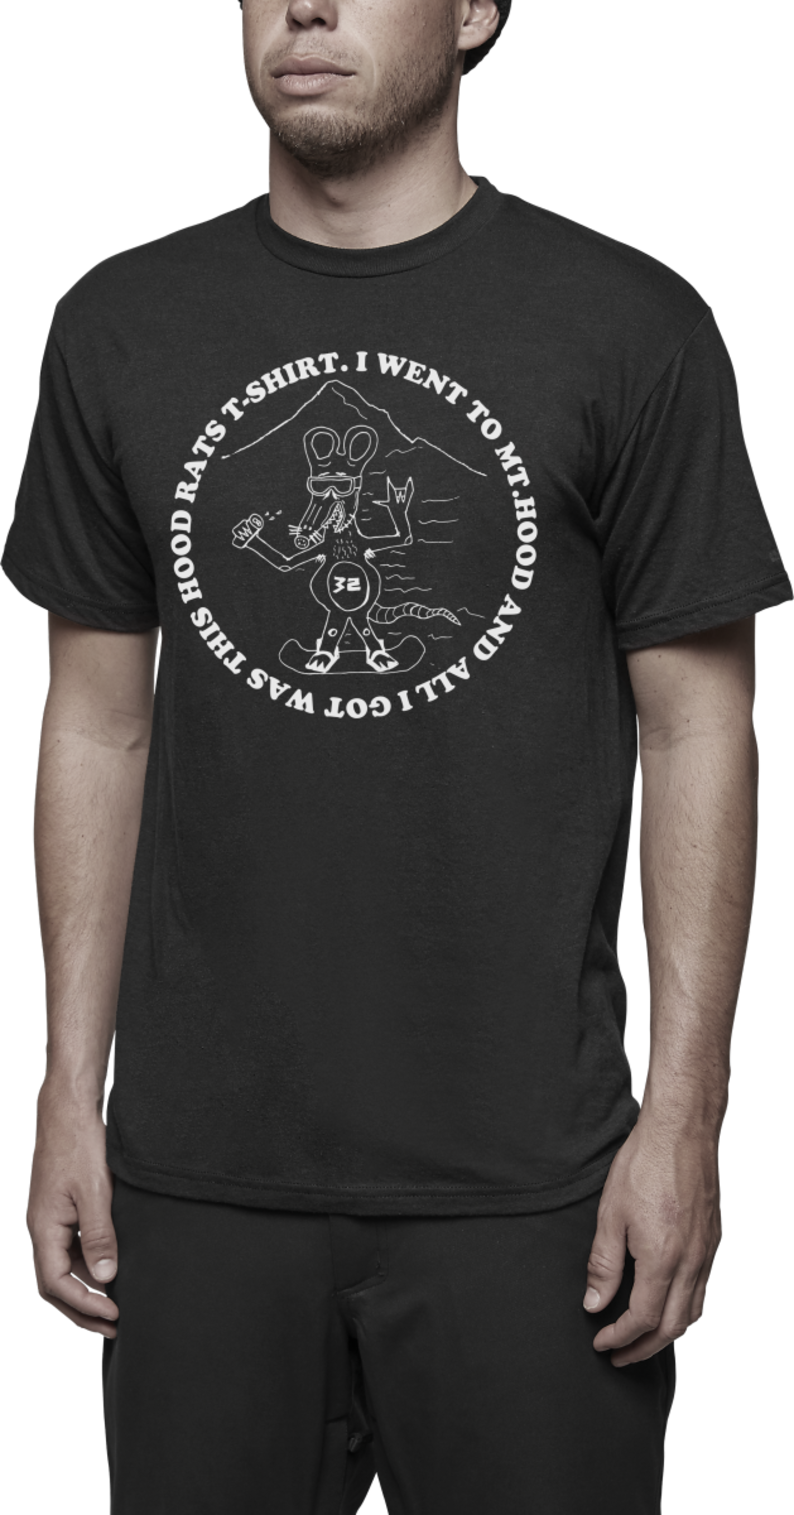 Thirtytwo Men's Hood Rats Gift Shop T-Shirt Black Clothing